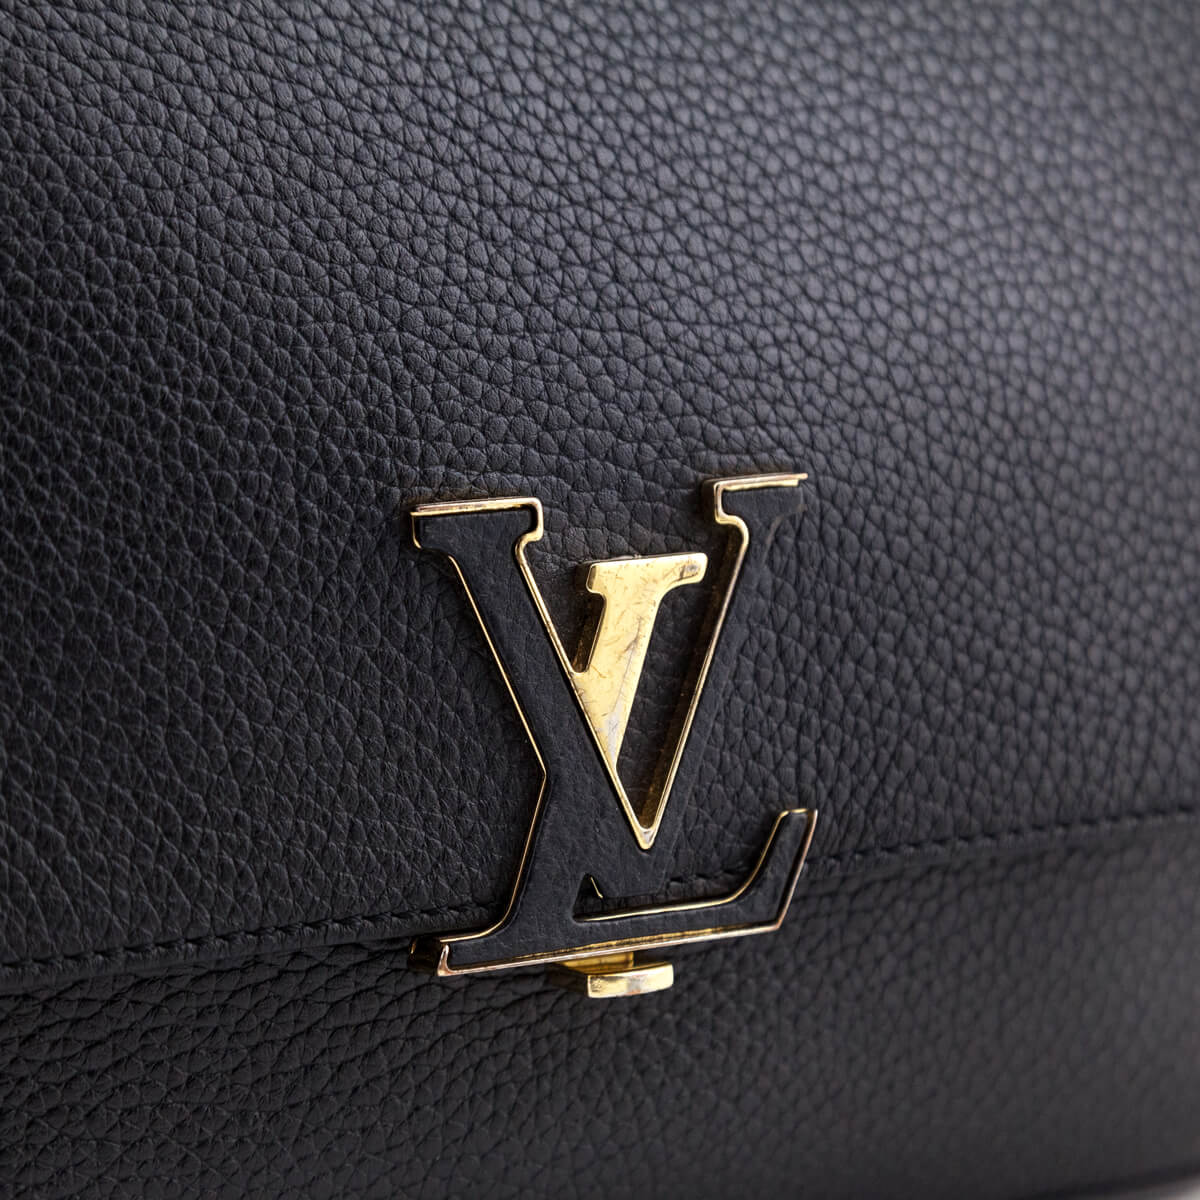 Louis Vuitton Top Handle Volta Taurillon Noir Black With Strap in